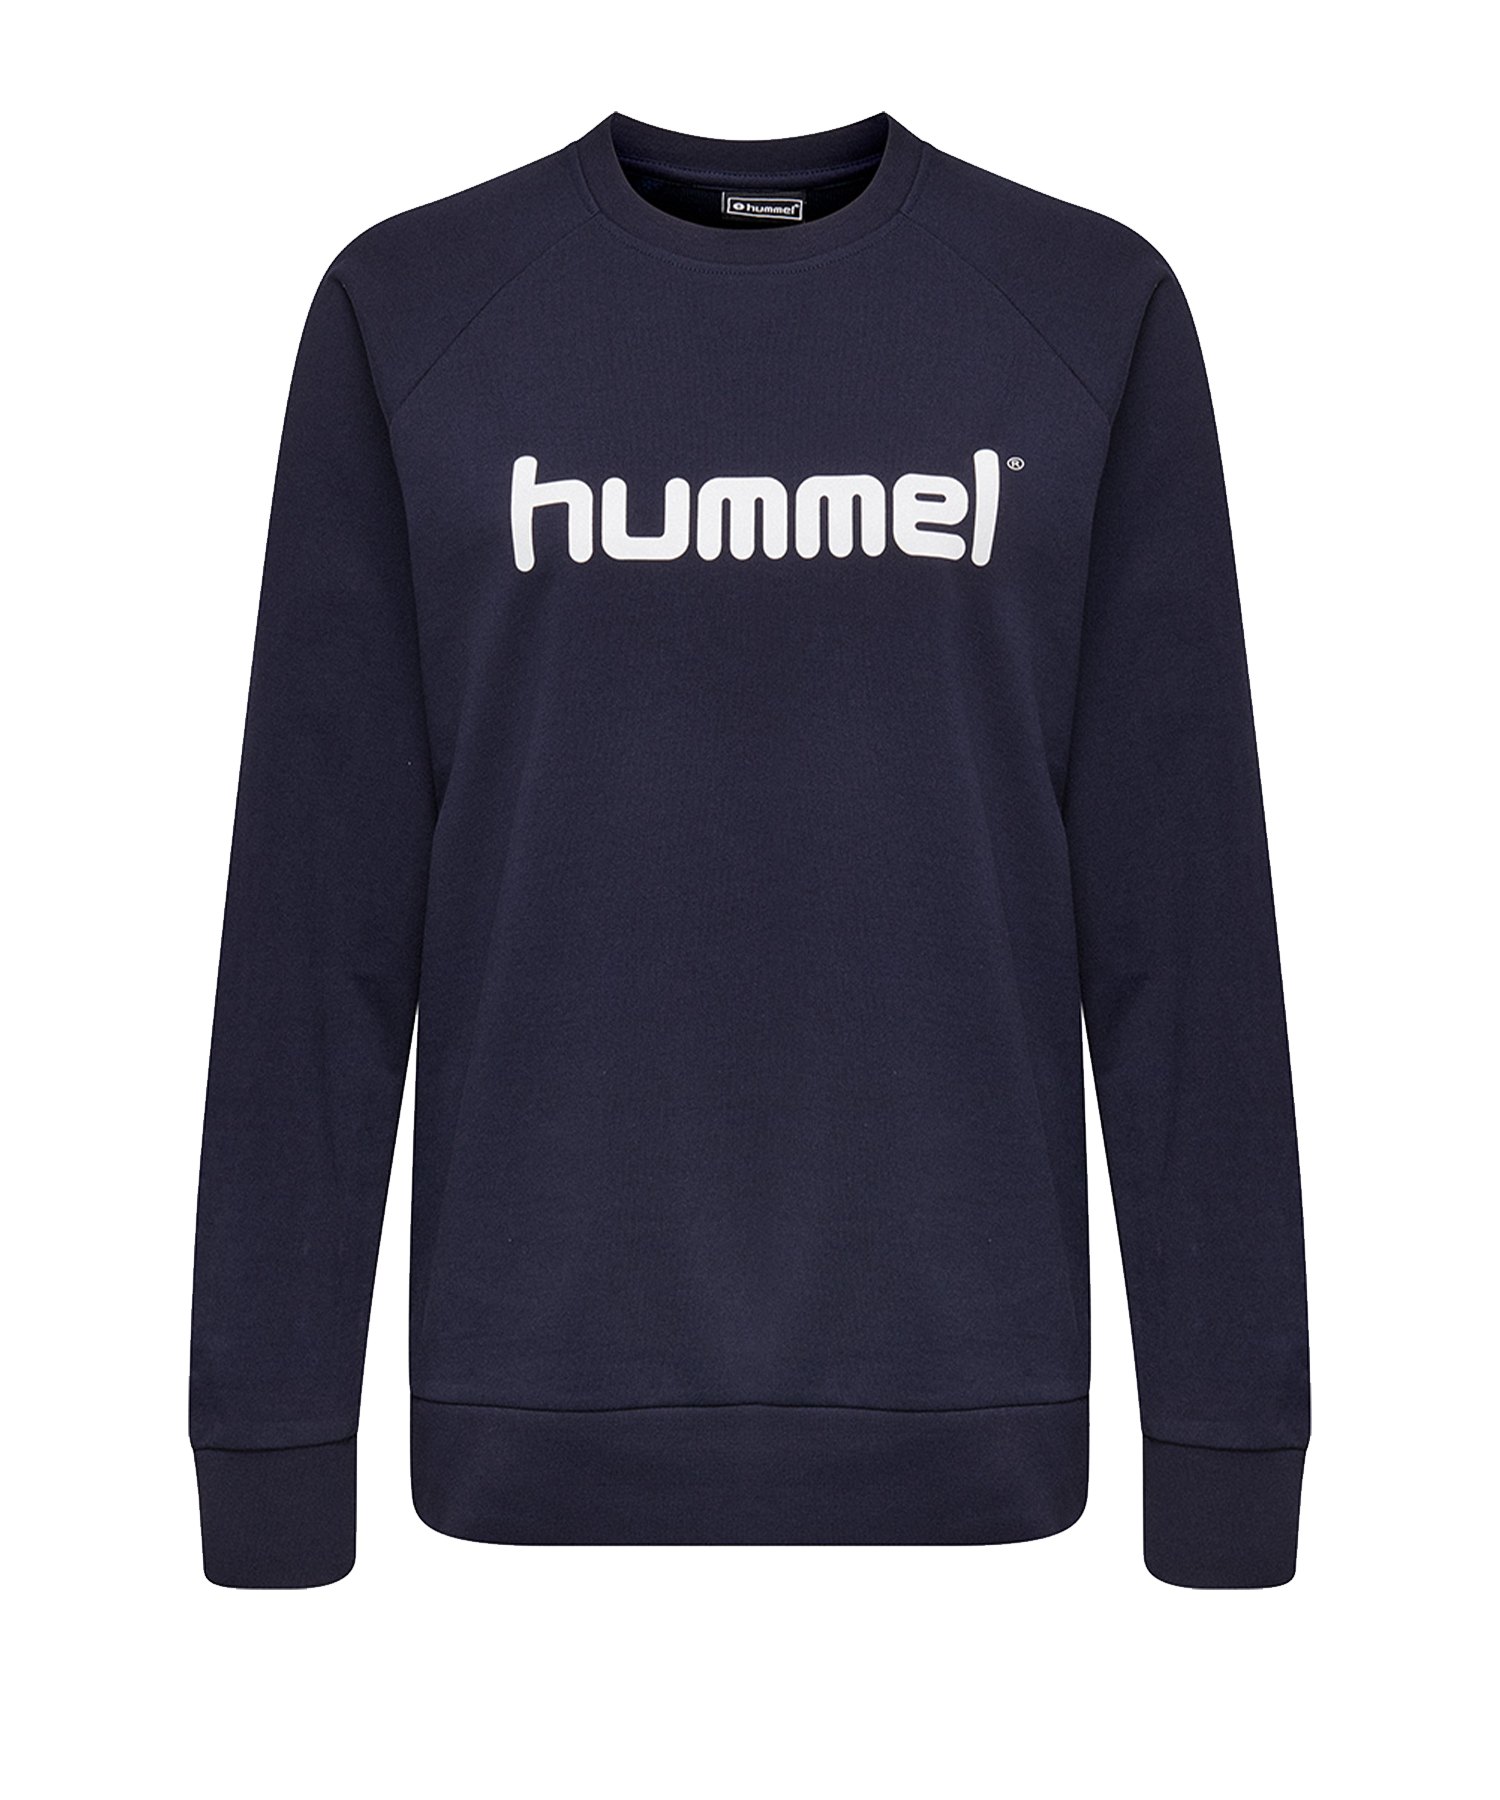 Hummel Cotton Logo Sweatshirt Damen Blau F7026 - Blau